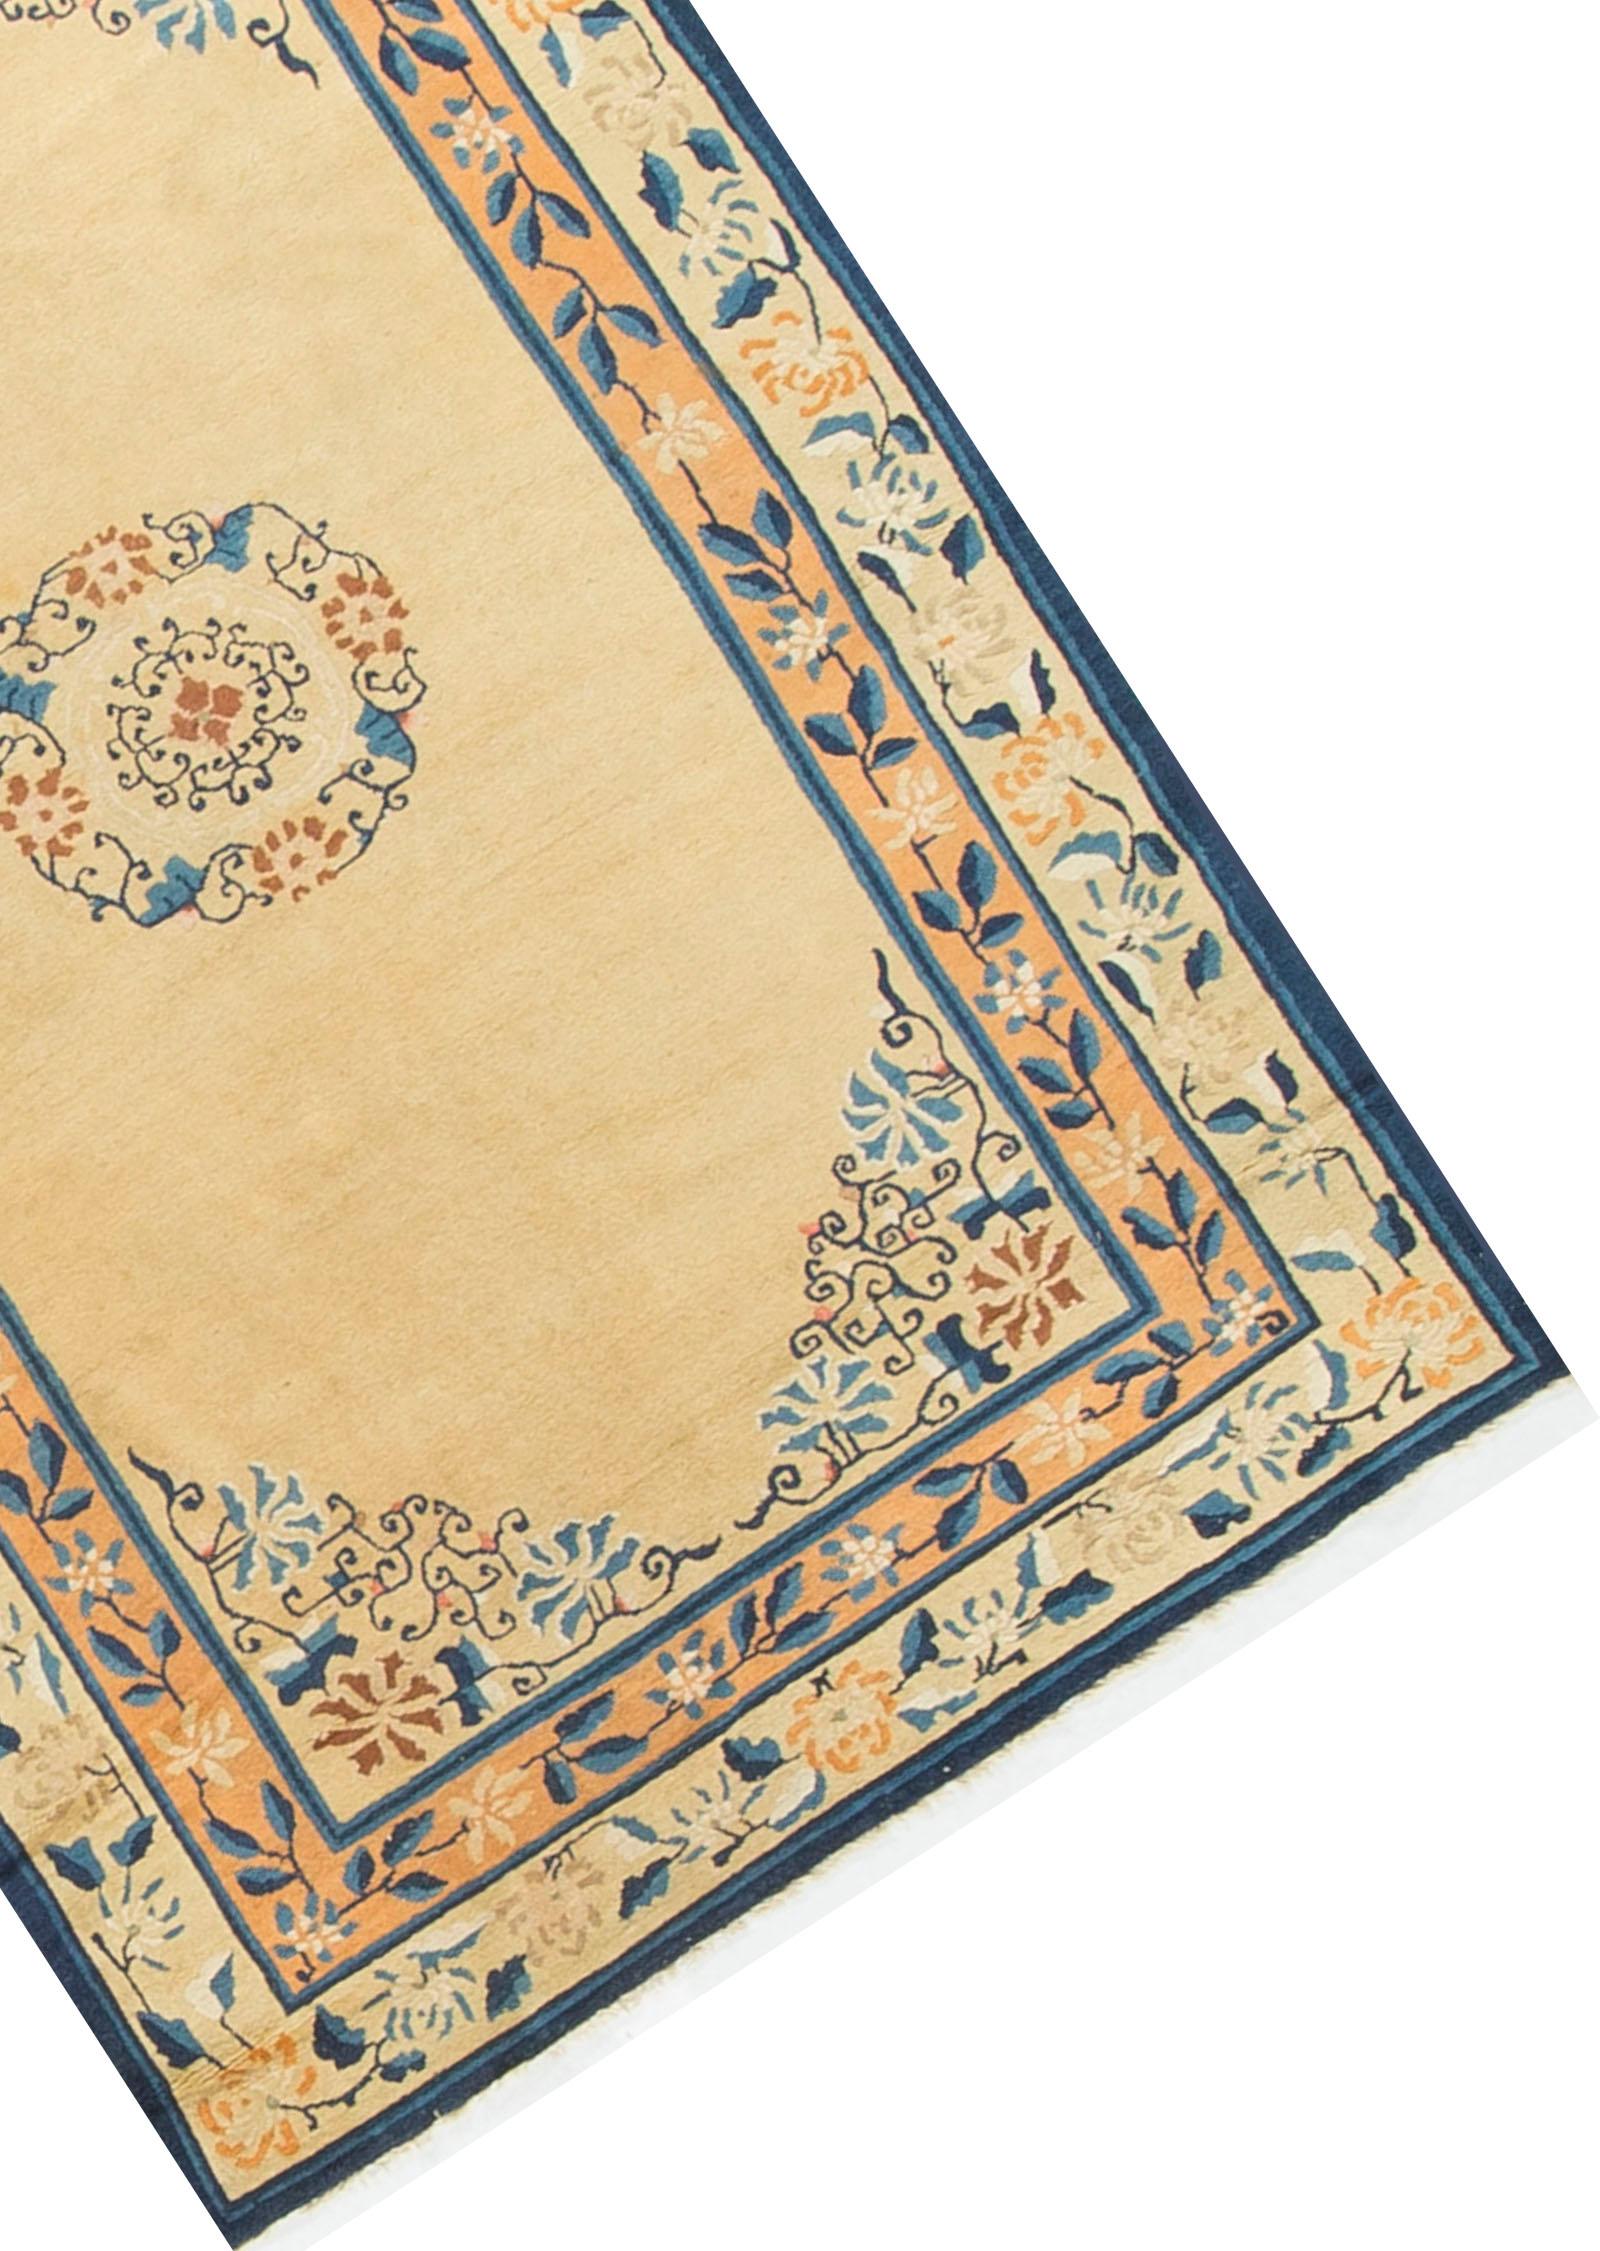 Antiaue Chinese Rug, Carpet, circa 1890 In Good Condition For Sale In Secaucus, NJ